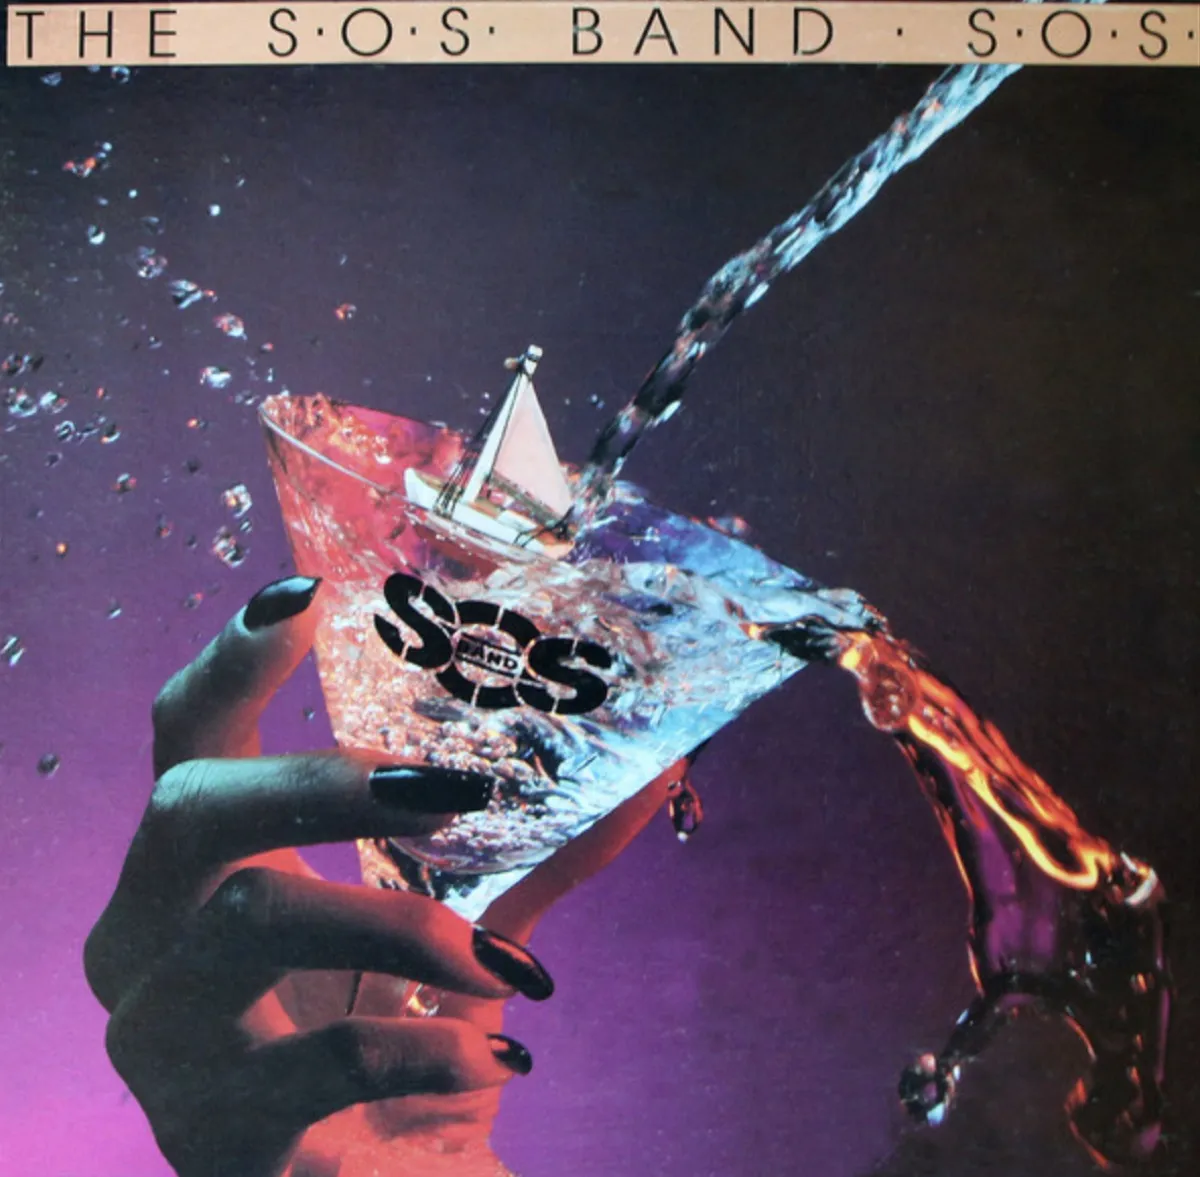 S.O.S. Band album cover